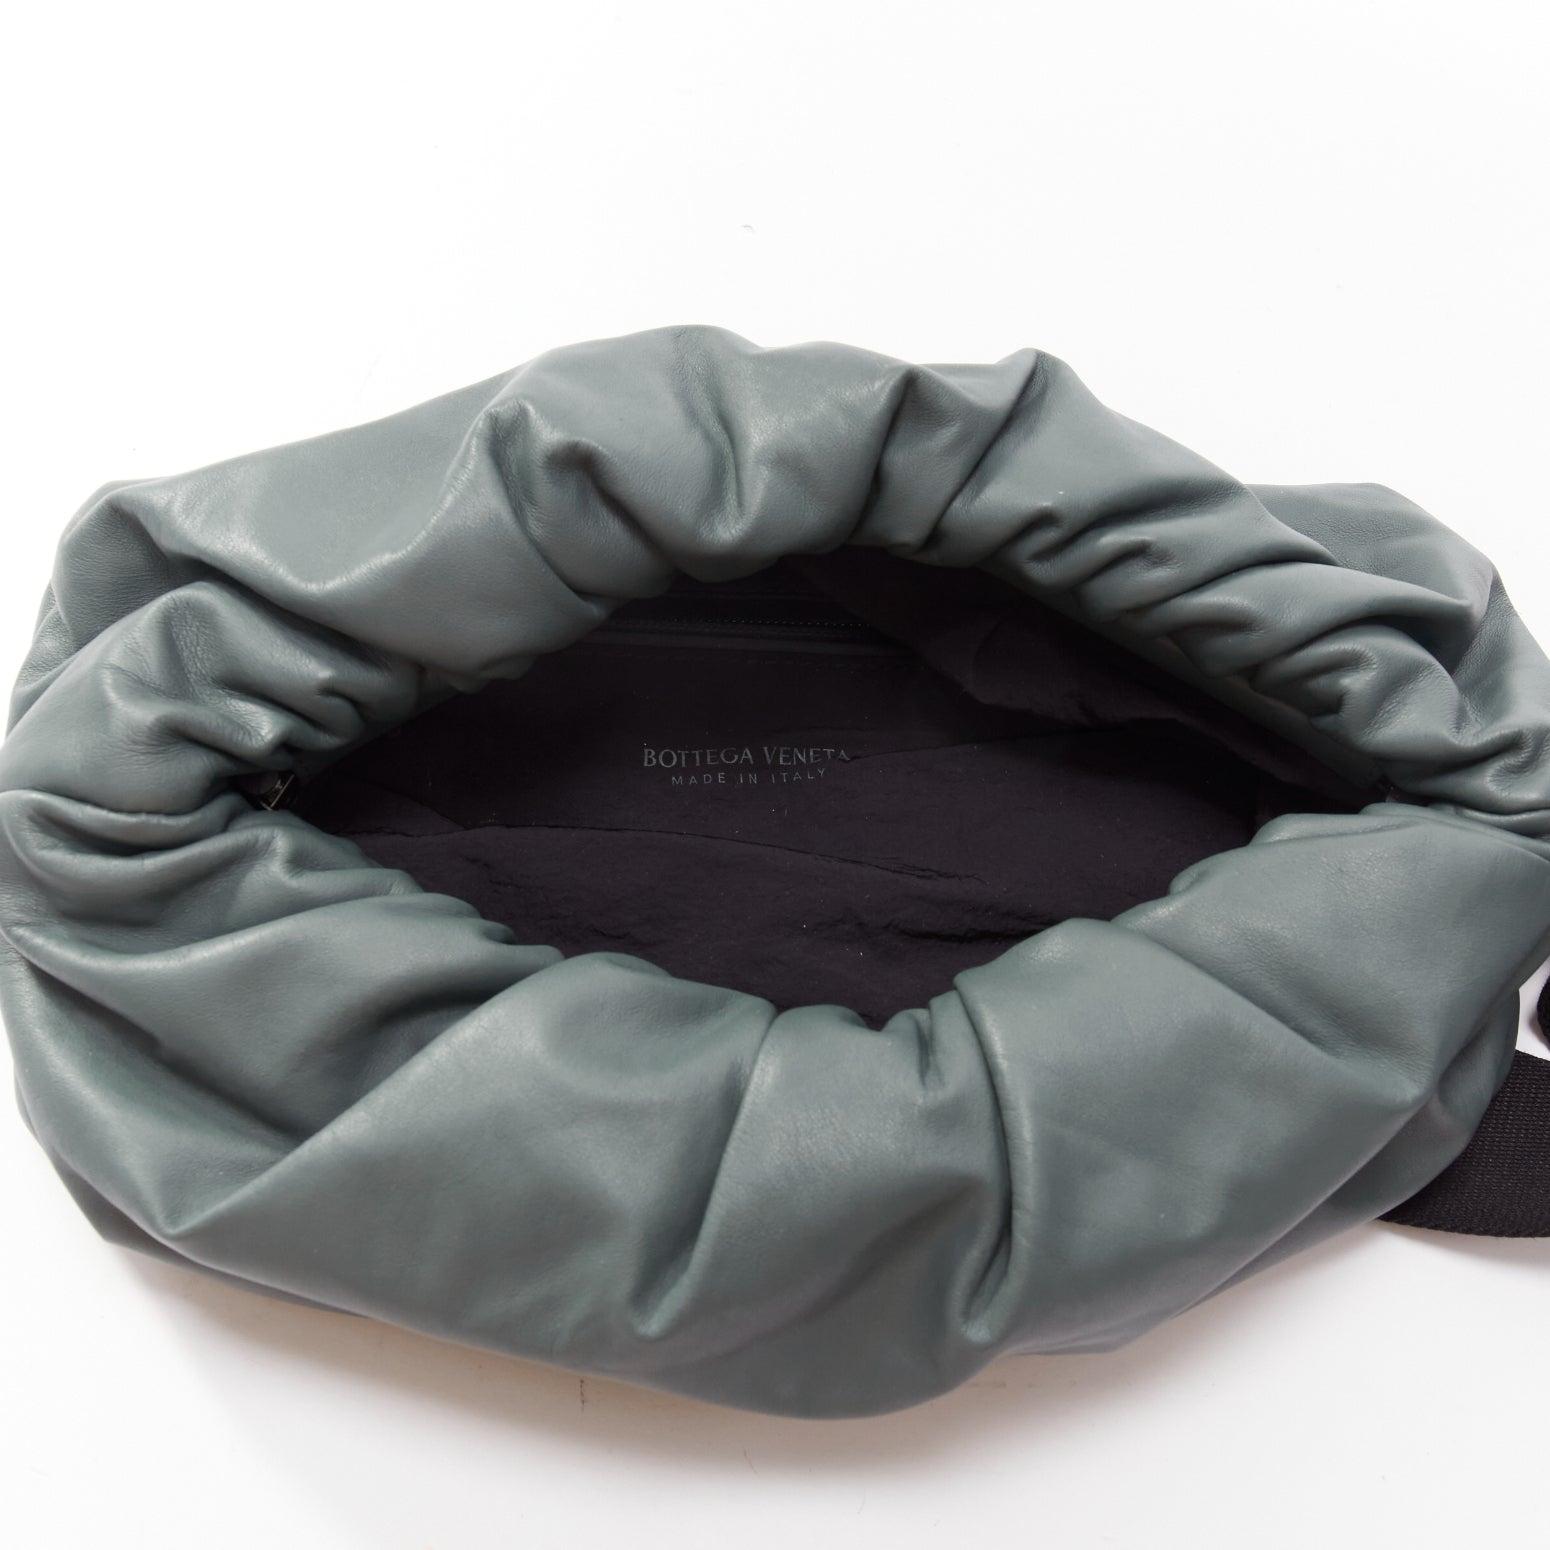 BOTTEGA VENETA The Body pouch grey smooth leather black sport strap waist bag For Sale 4